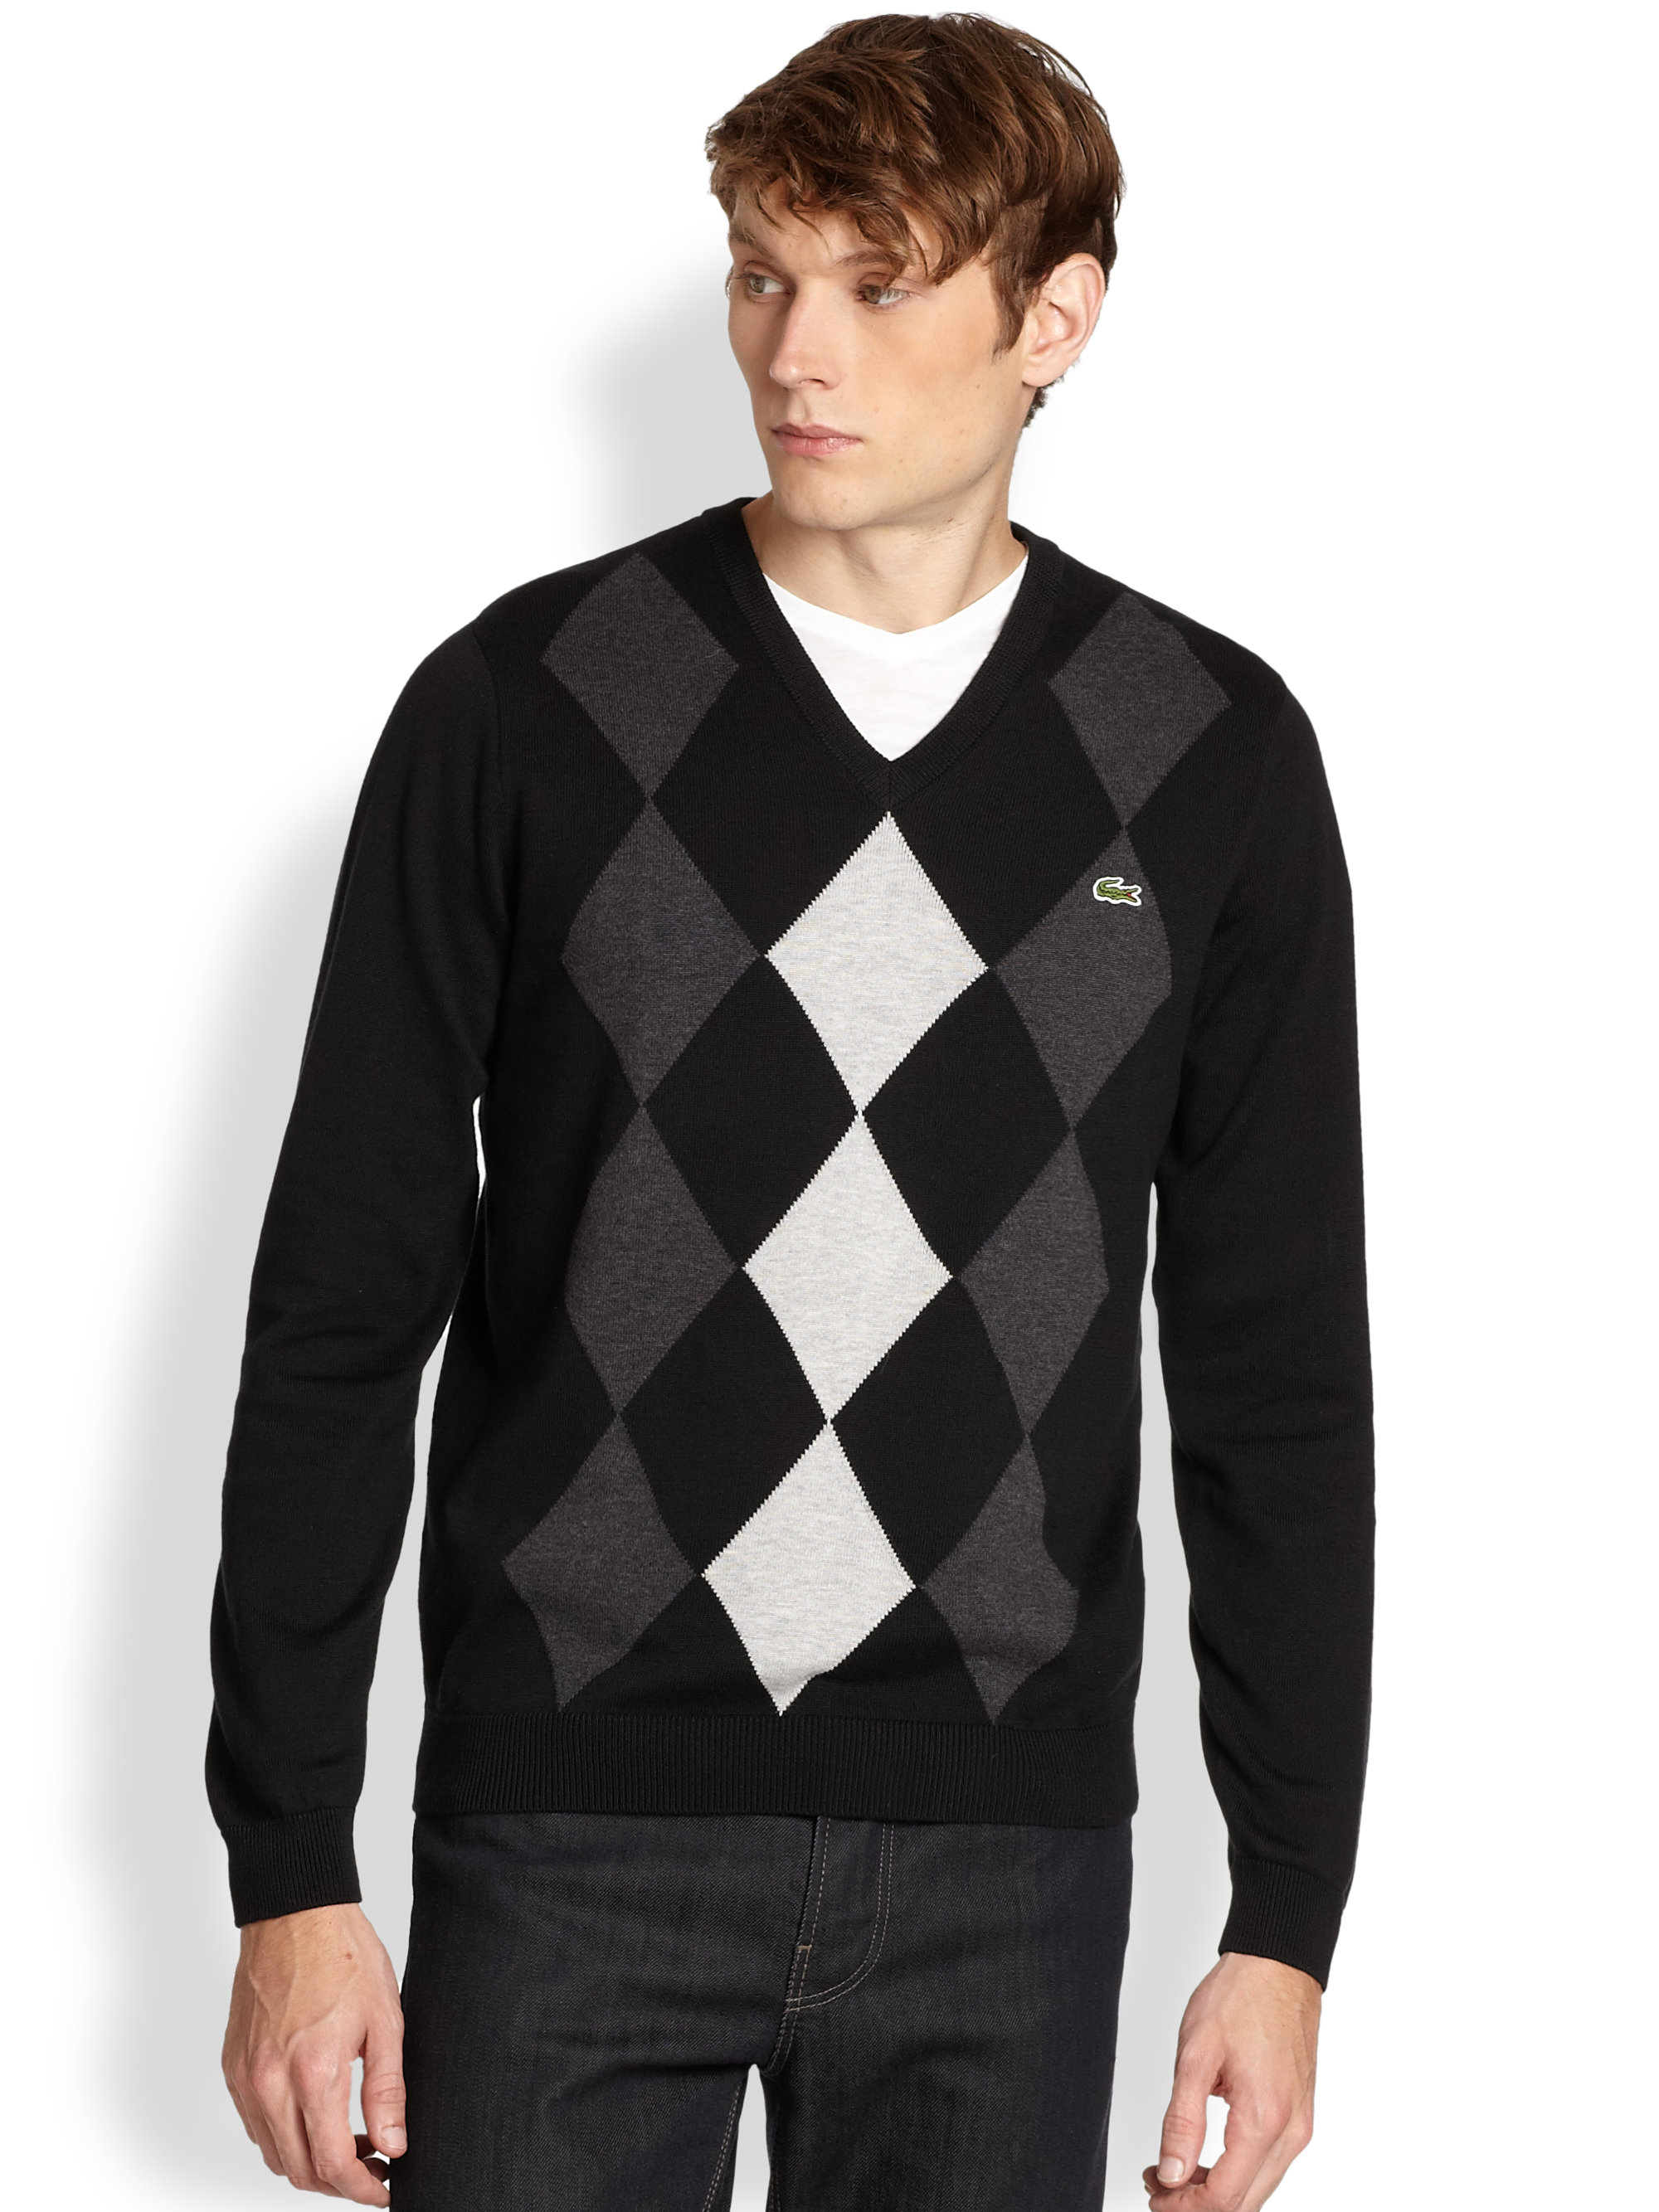 Lyst - Lacoste Argyle Cotton Sweater in Black for Men